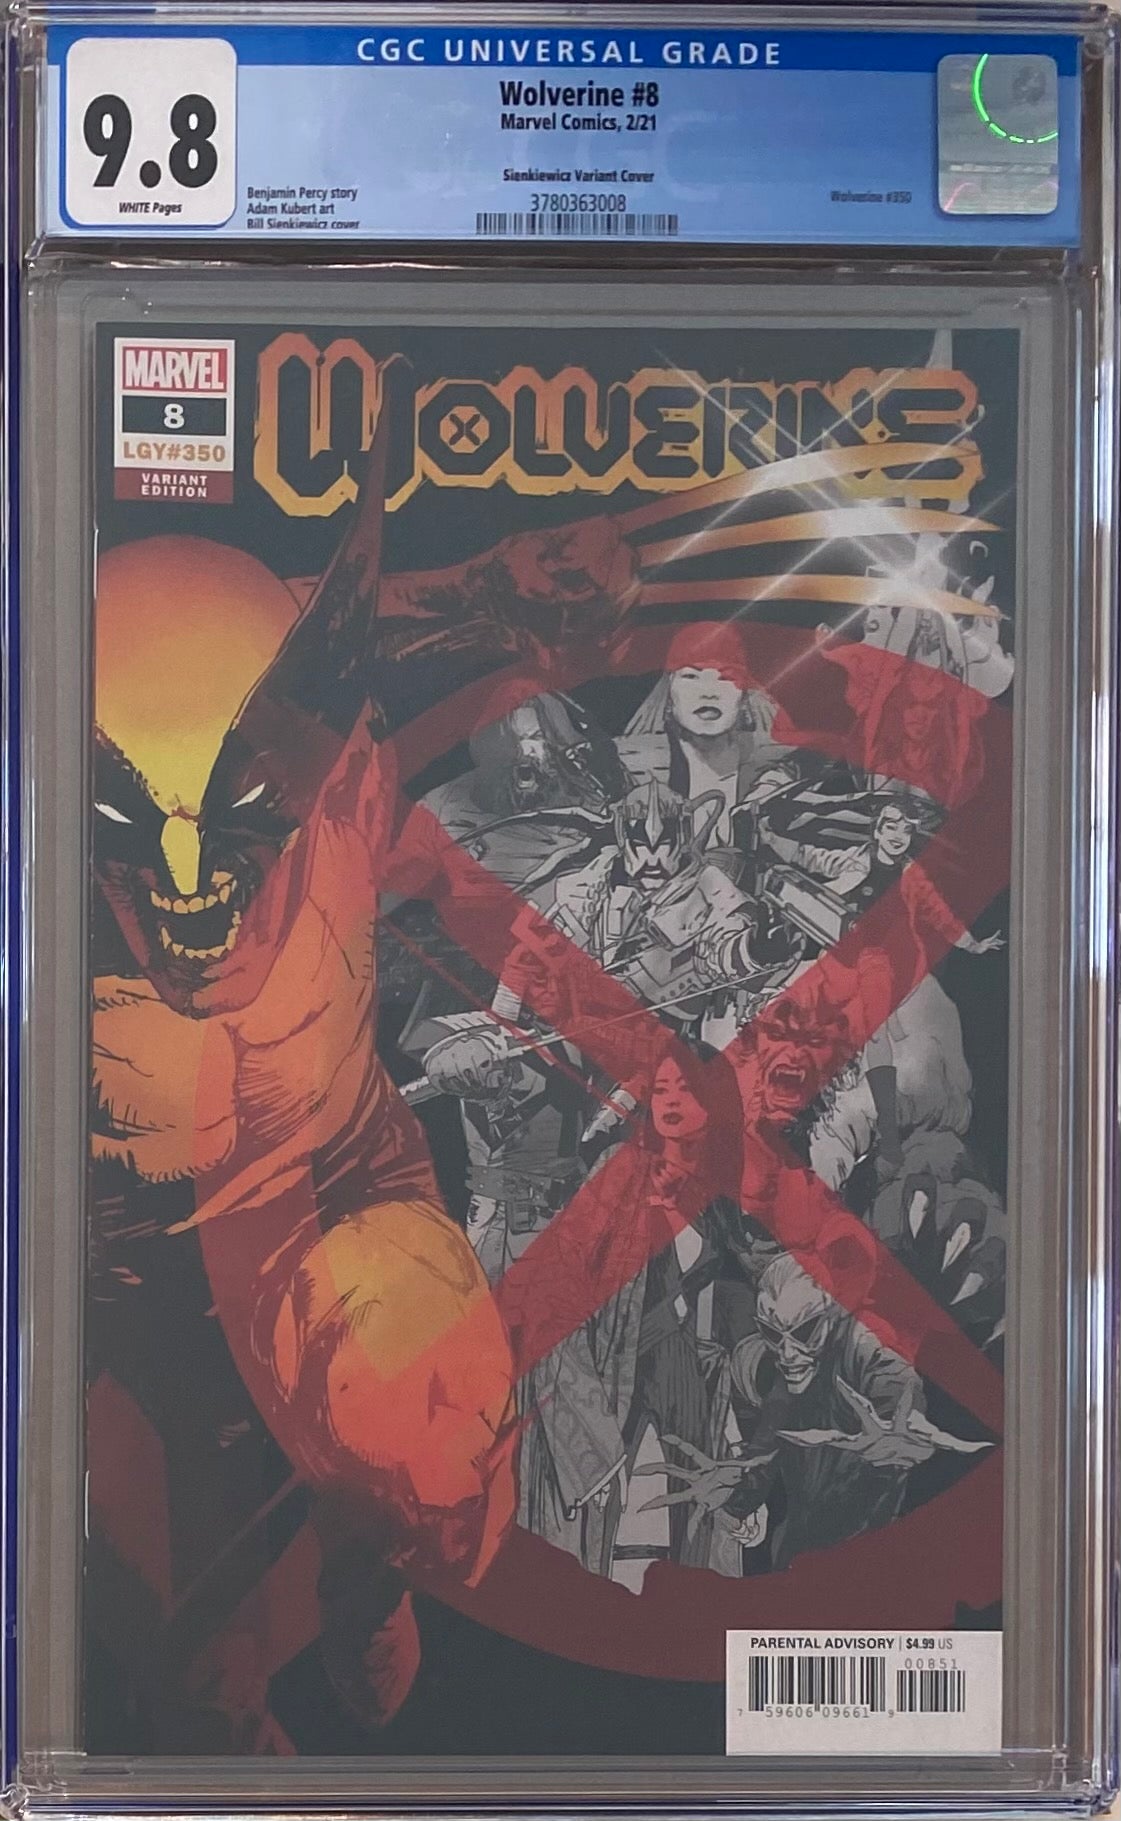 Wolverine #8 (#350) Sienkiewicz Variant CGC 9.8